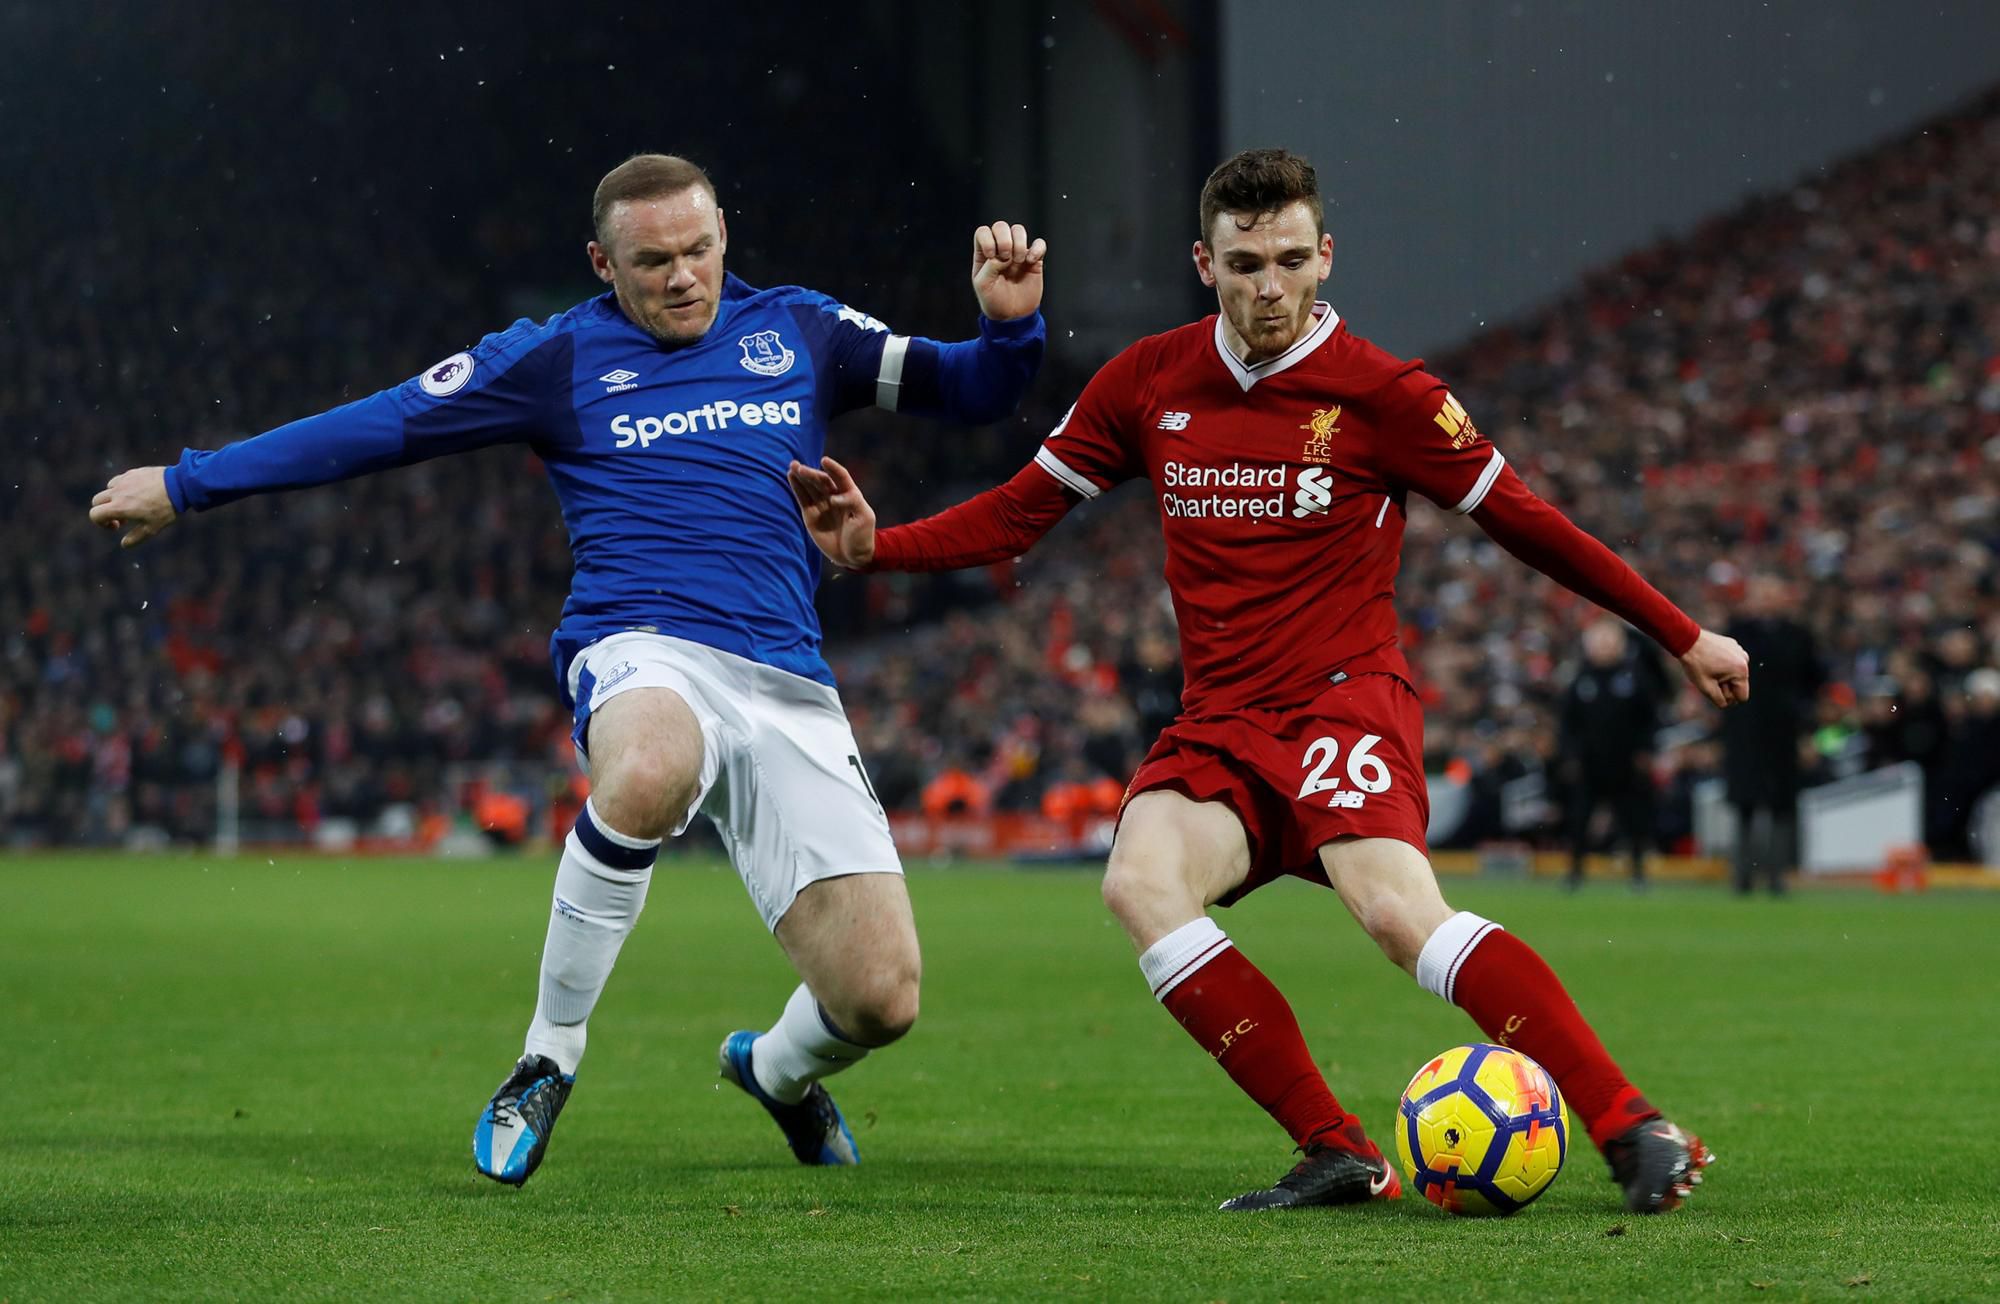 Wayne Rooney (Everton) v súboji s Andrew Robertson (Liverpool FC).